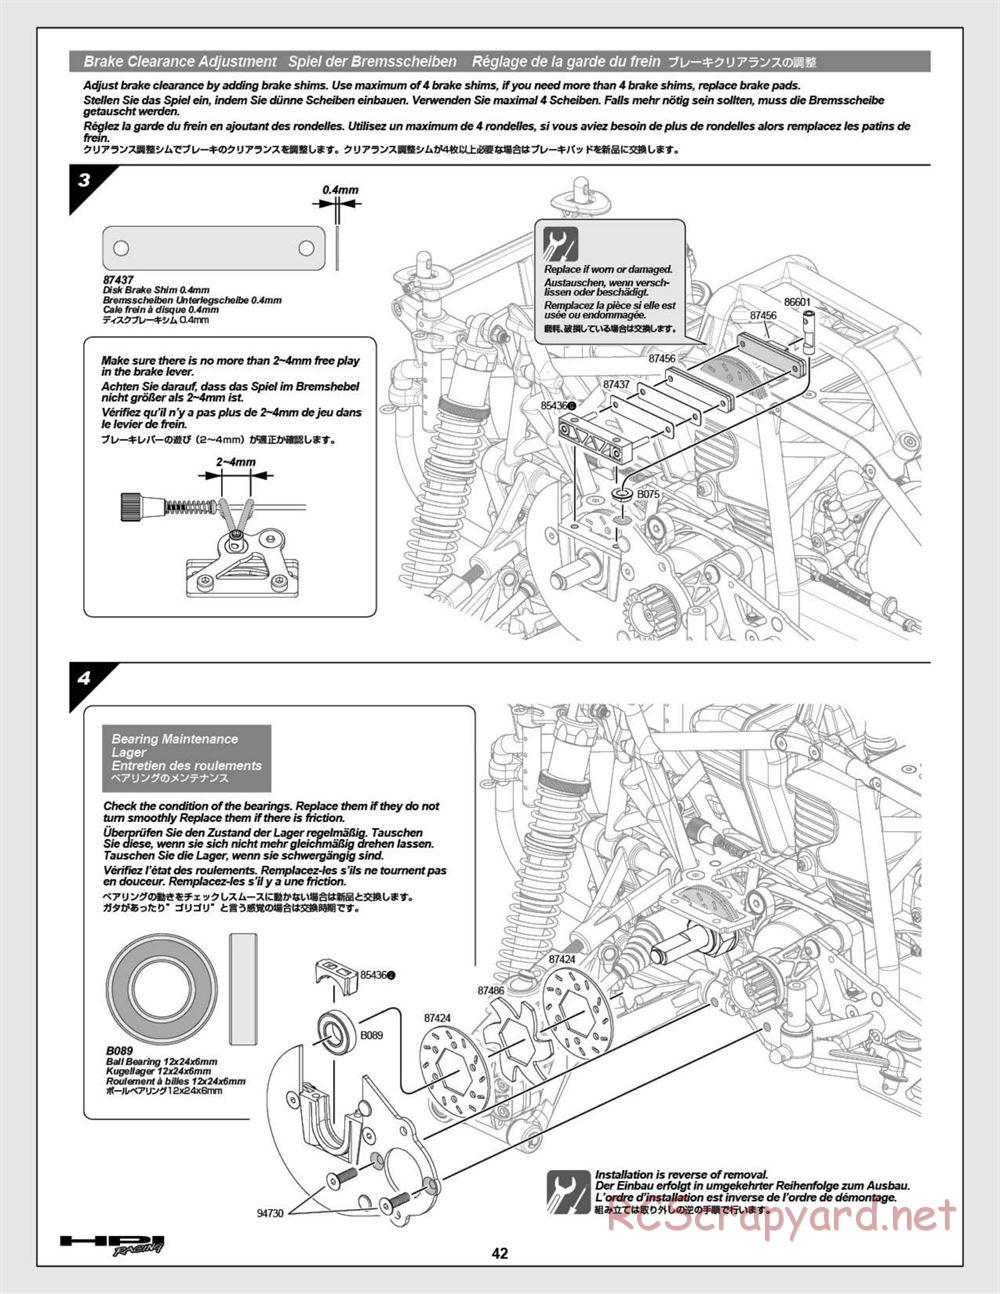 HPI - Baja 5T (2008) - Manual - Page 42